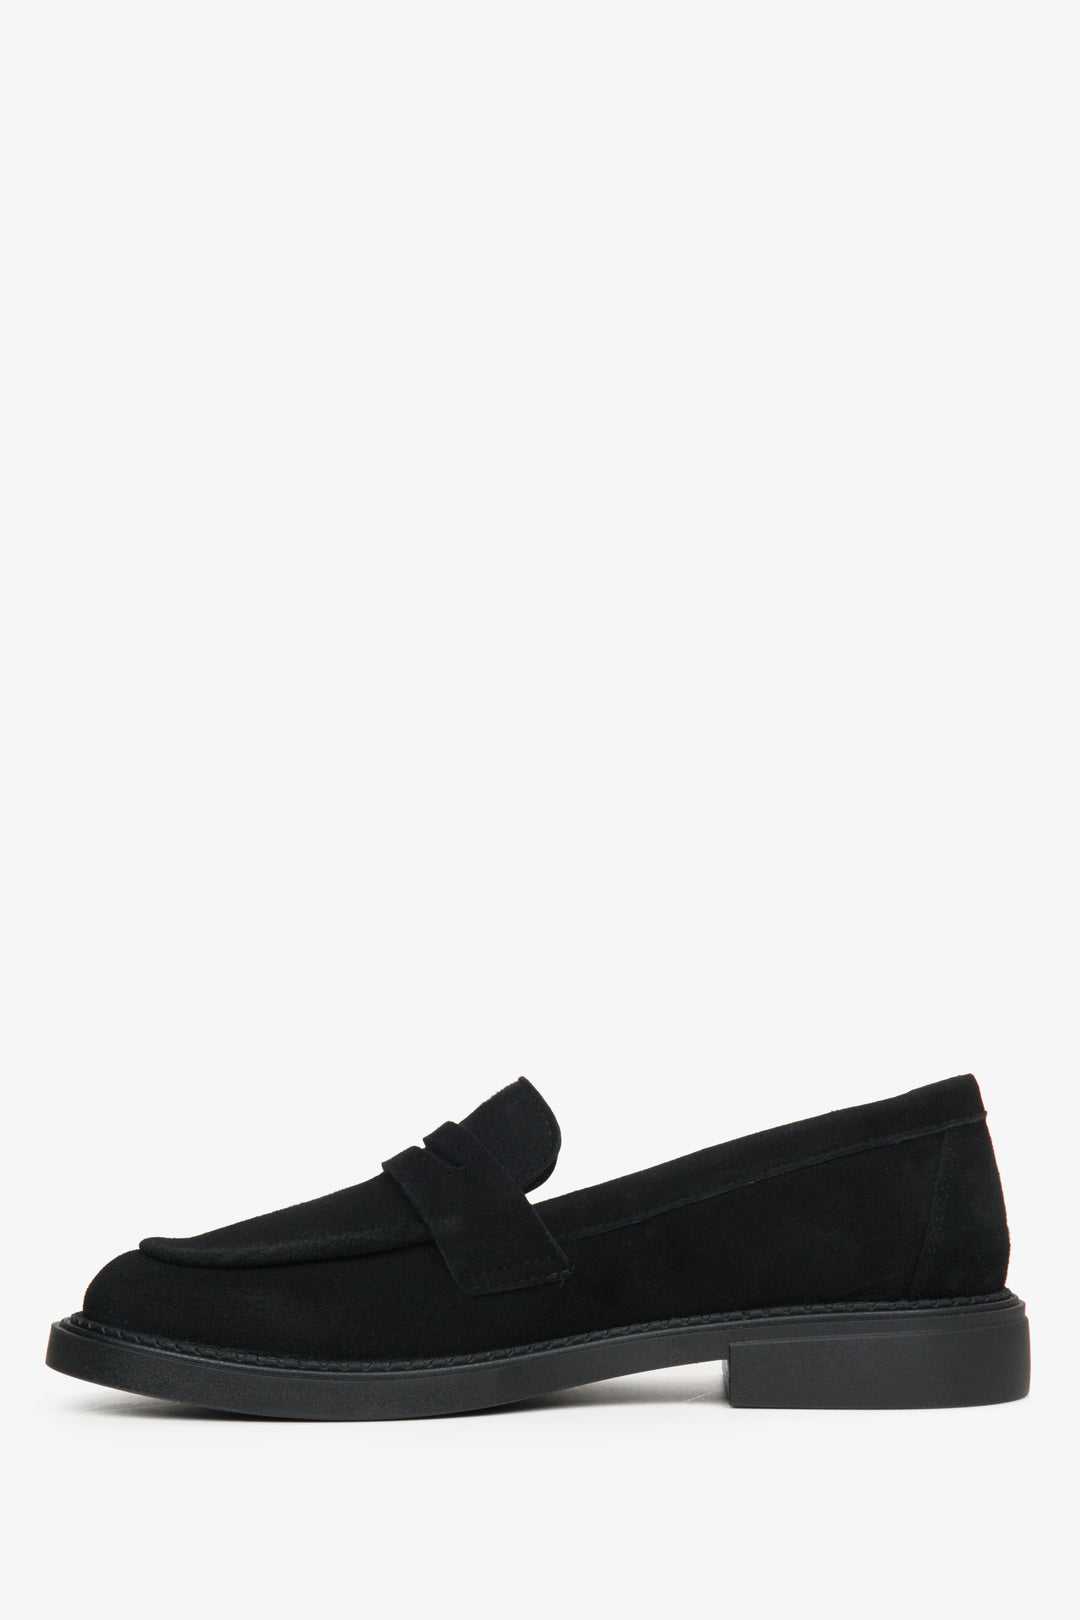 Elegant women's black loafers for spring by Estro - shoe profile.